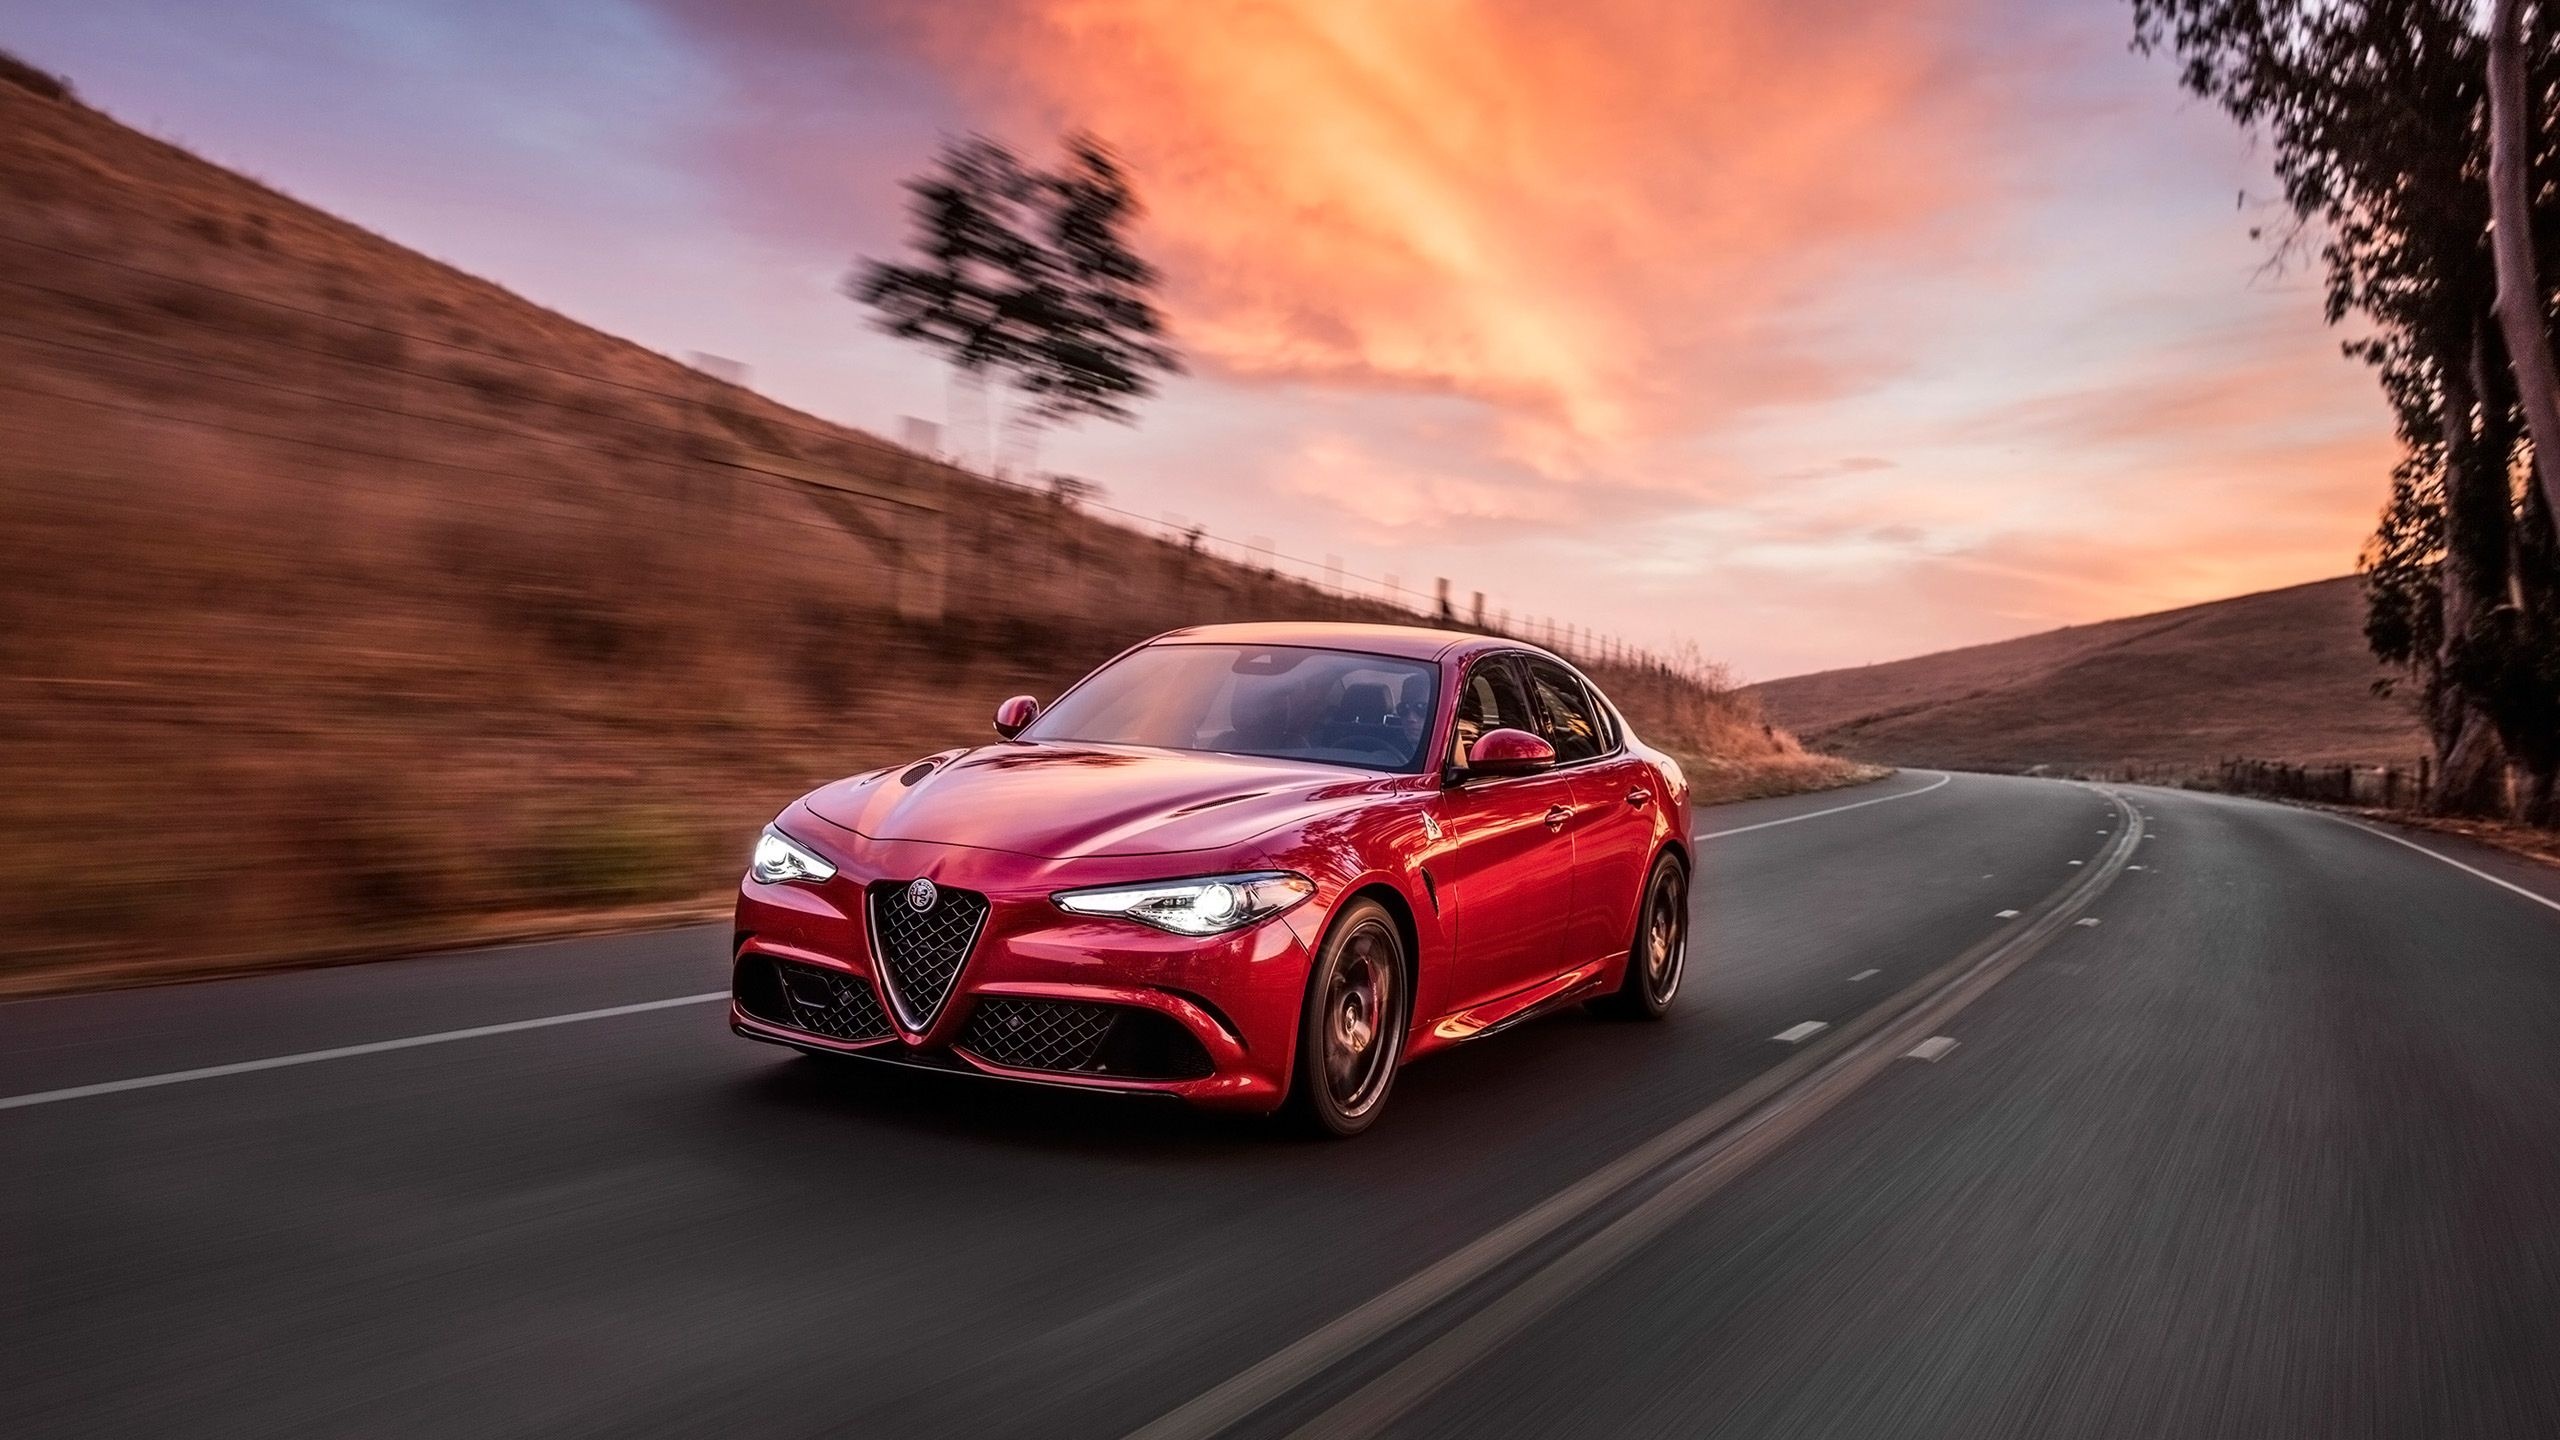 Alfa Romeo Giulia, Car wallpapers, High resolution, 2560x1440 HD Desktop